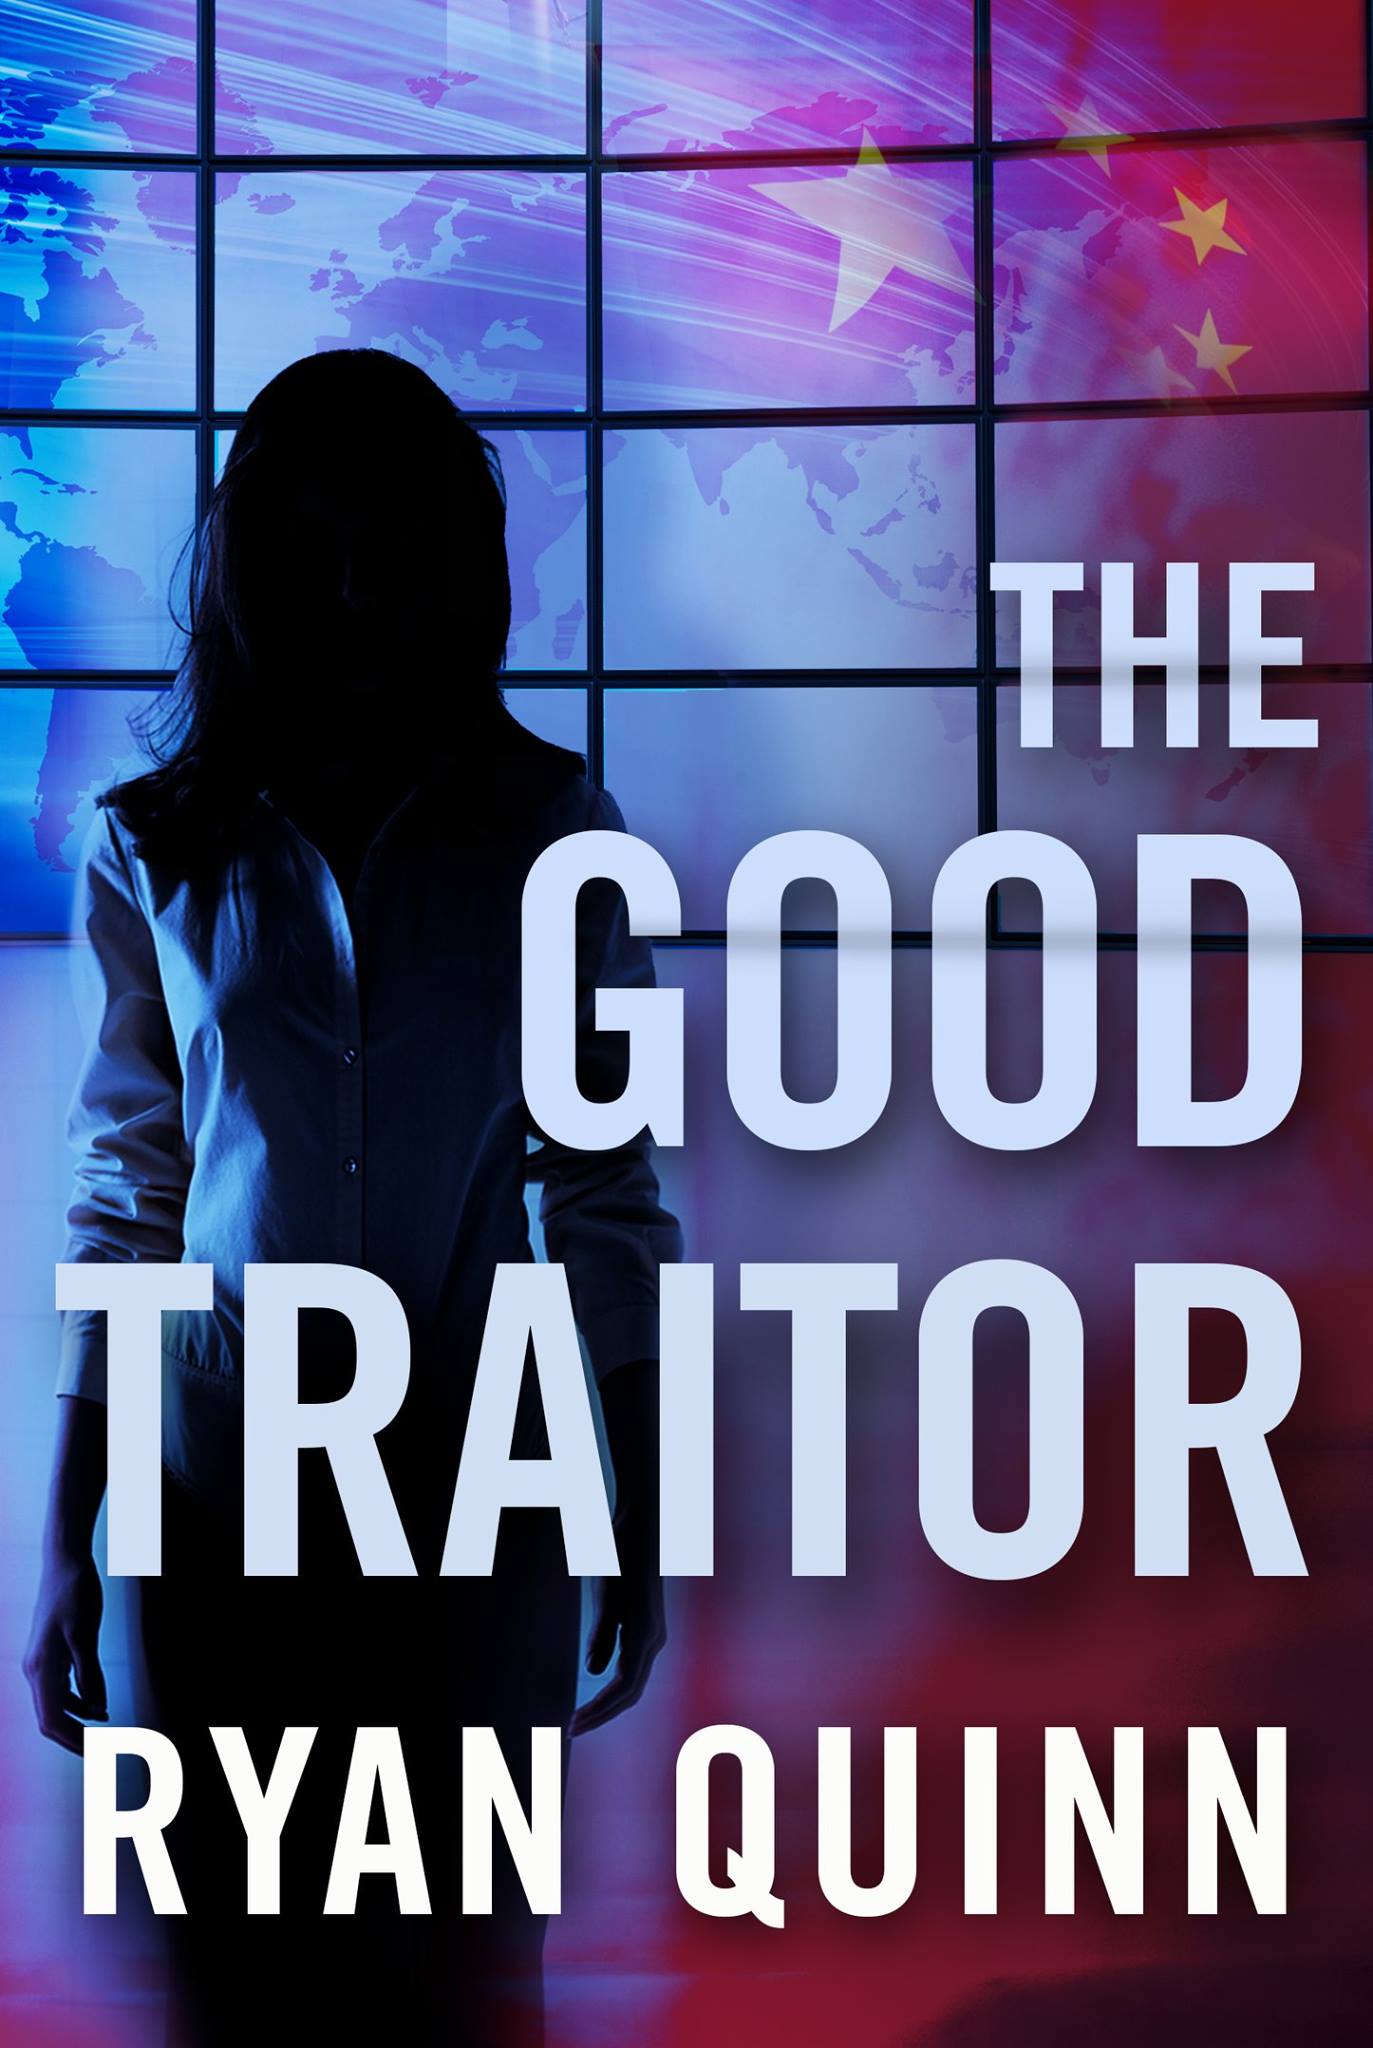 The Good Traitor by Ryan Quinn